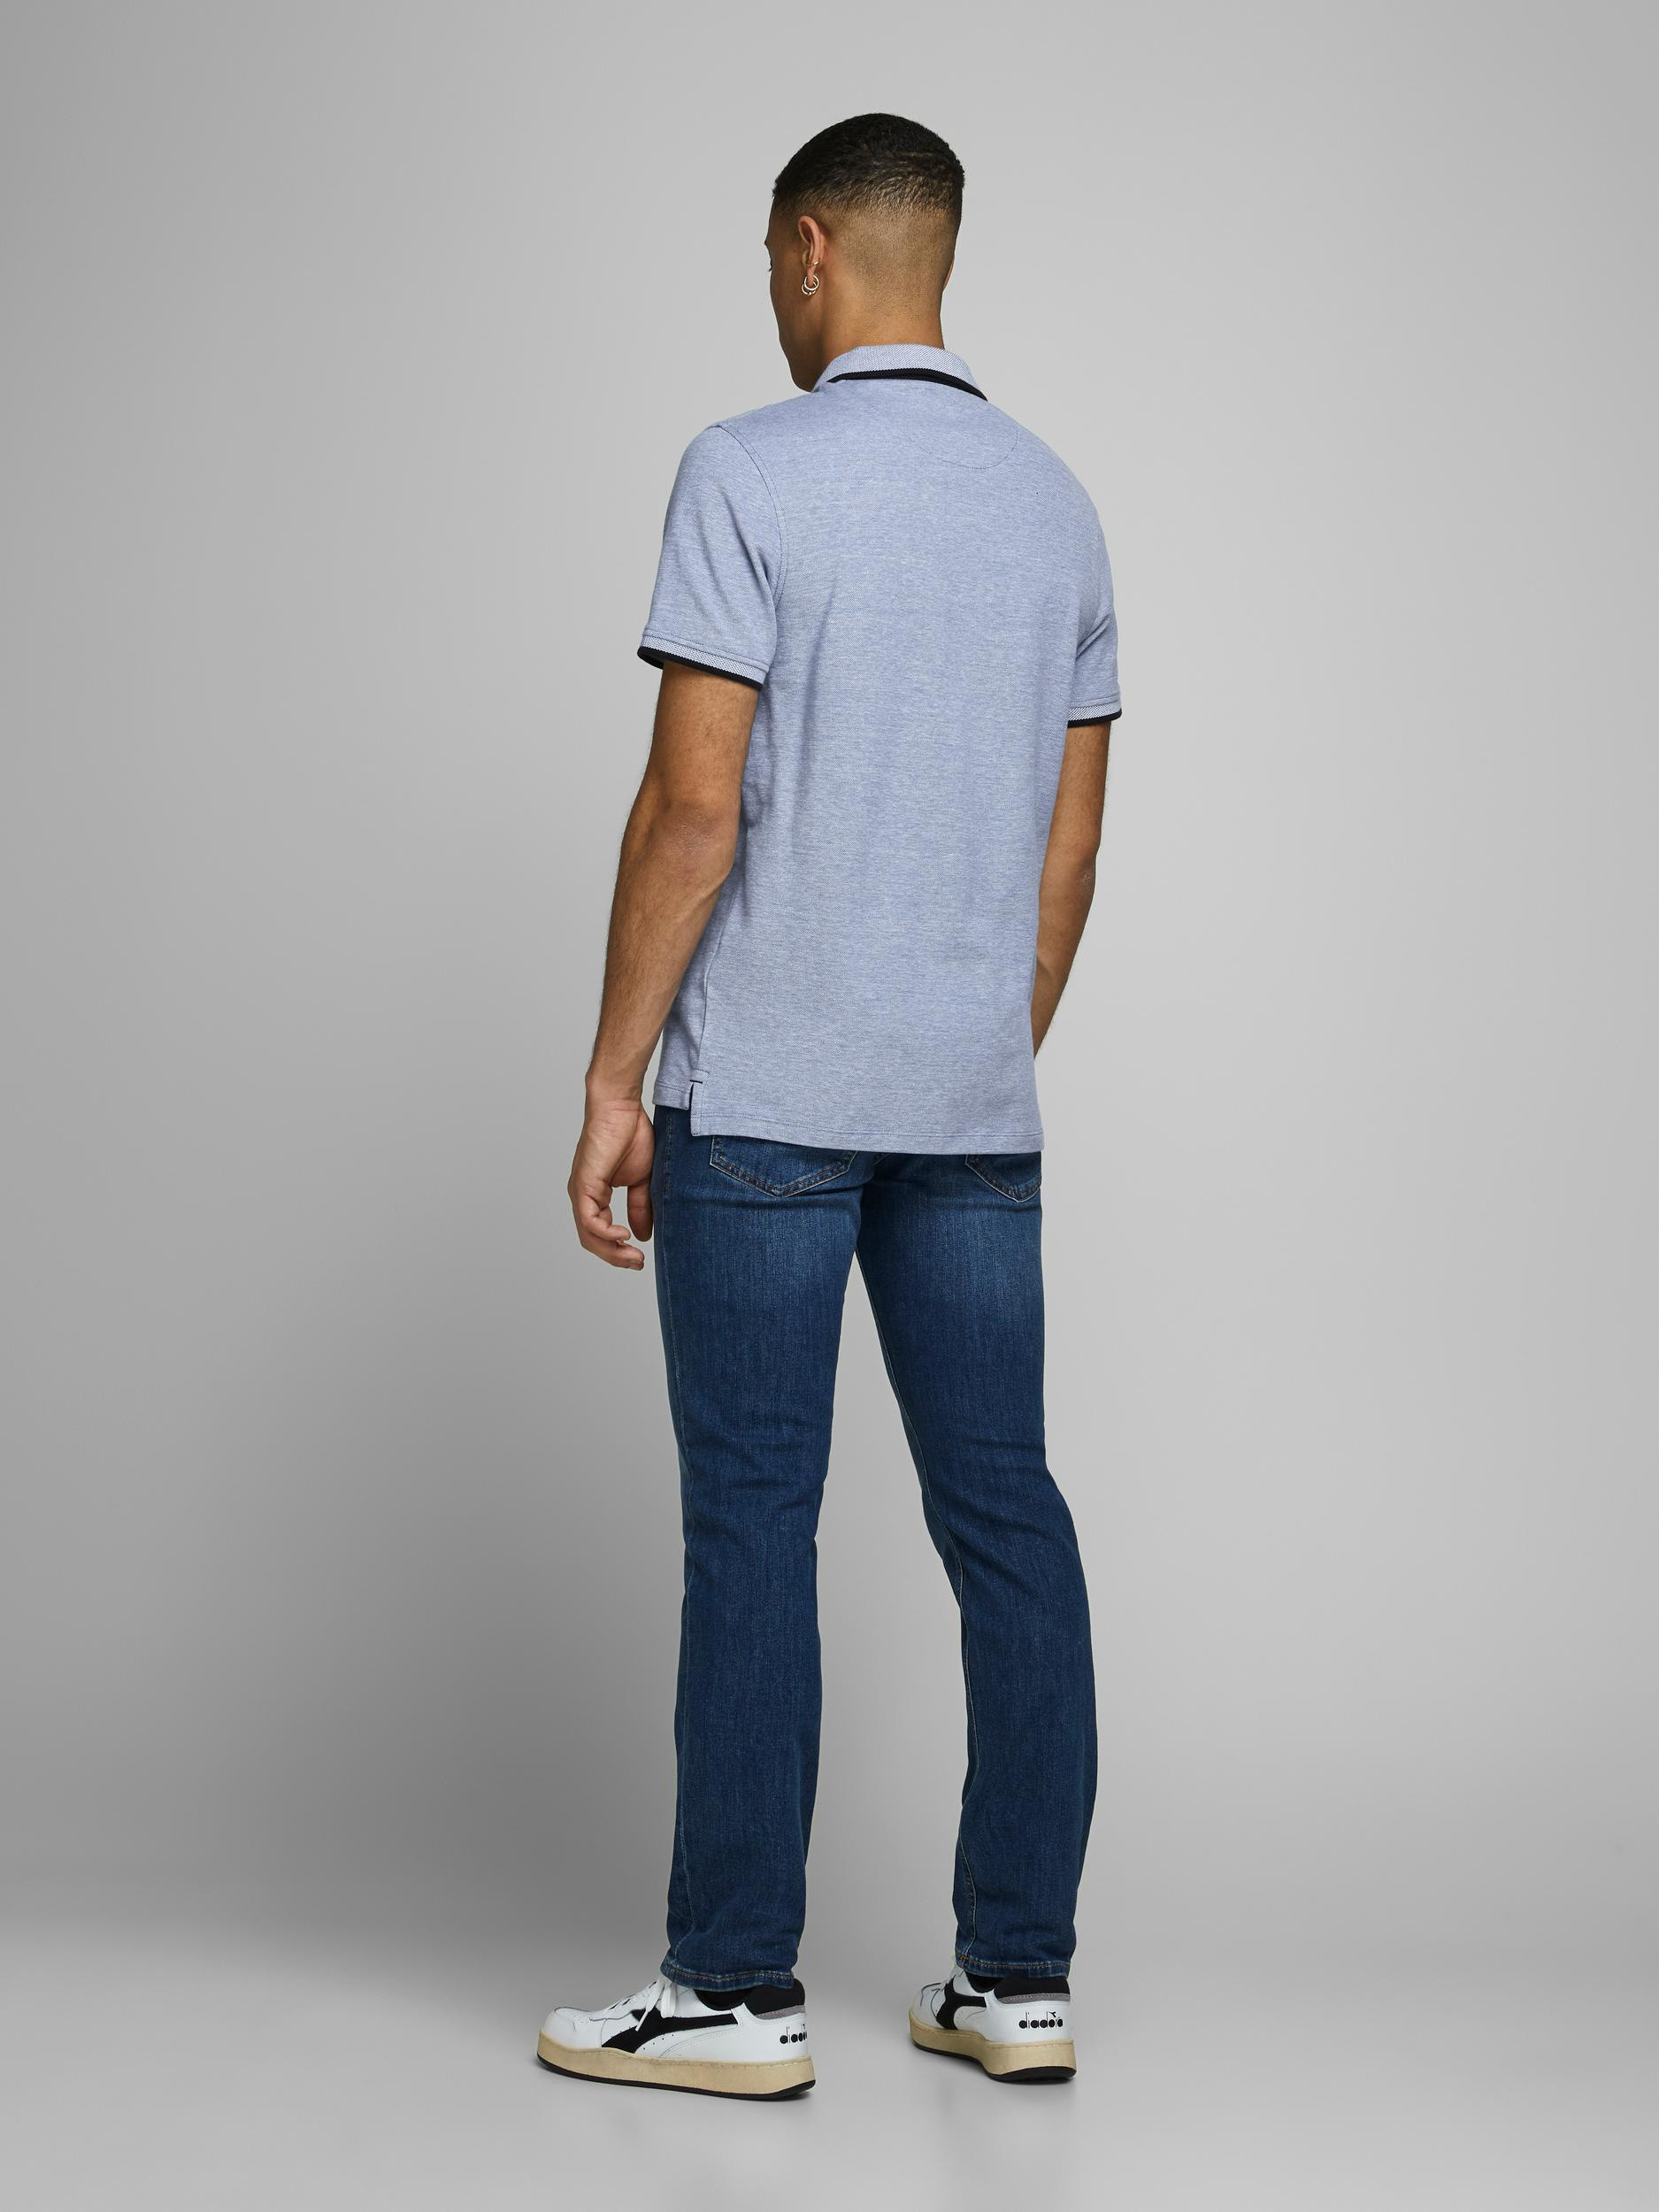 Jack & Jones - Slim fit polo shirt in cotton, Light Blue, large image number 2